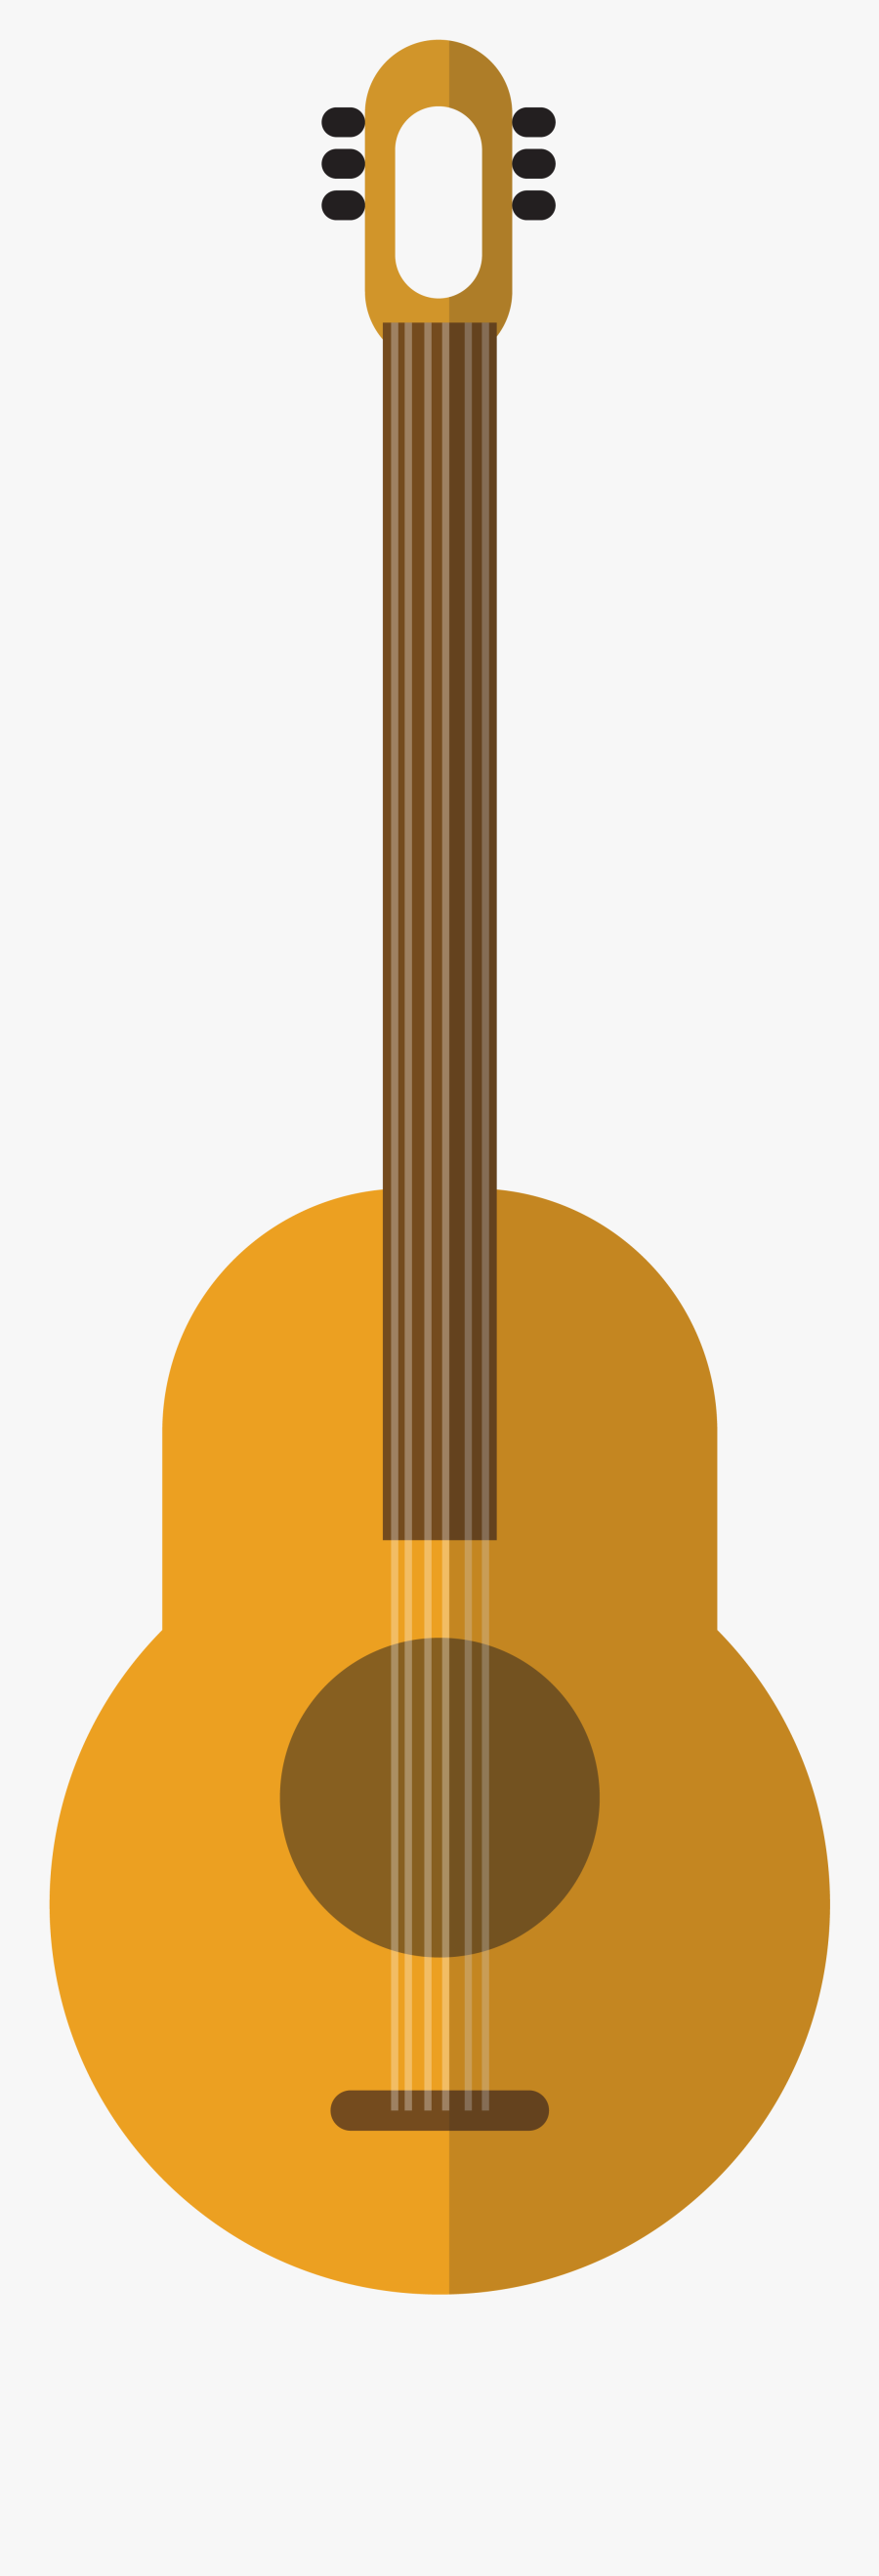 Acoustic Guitar Ukulele - Guitar Png Vector, Transparent Clipart